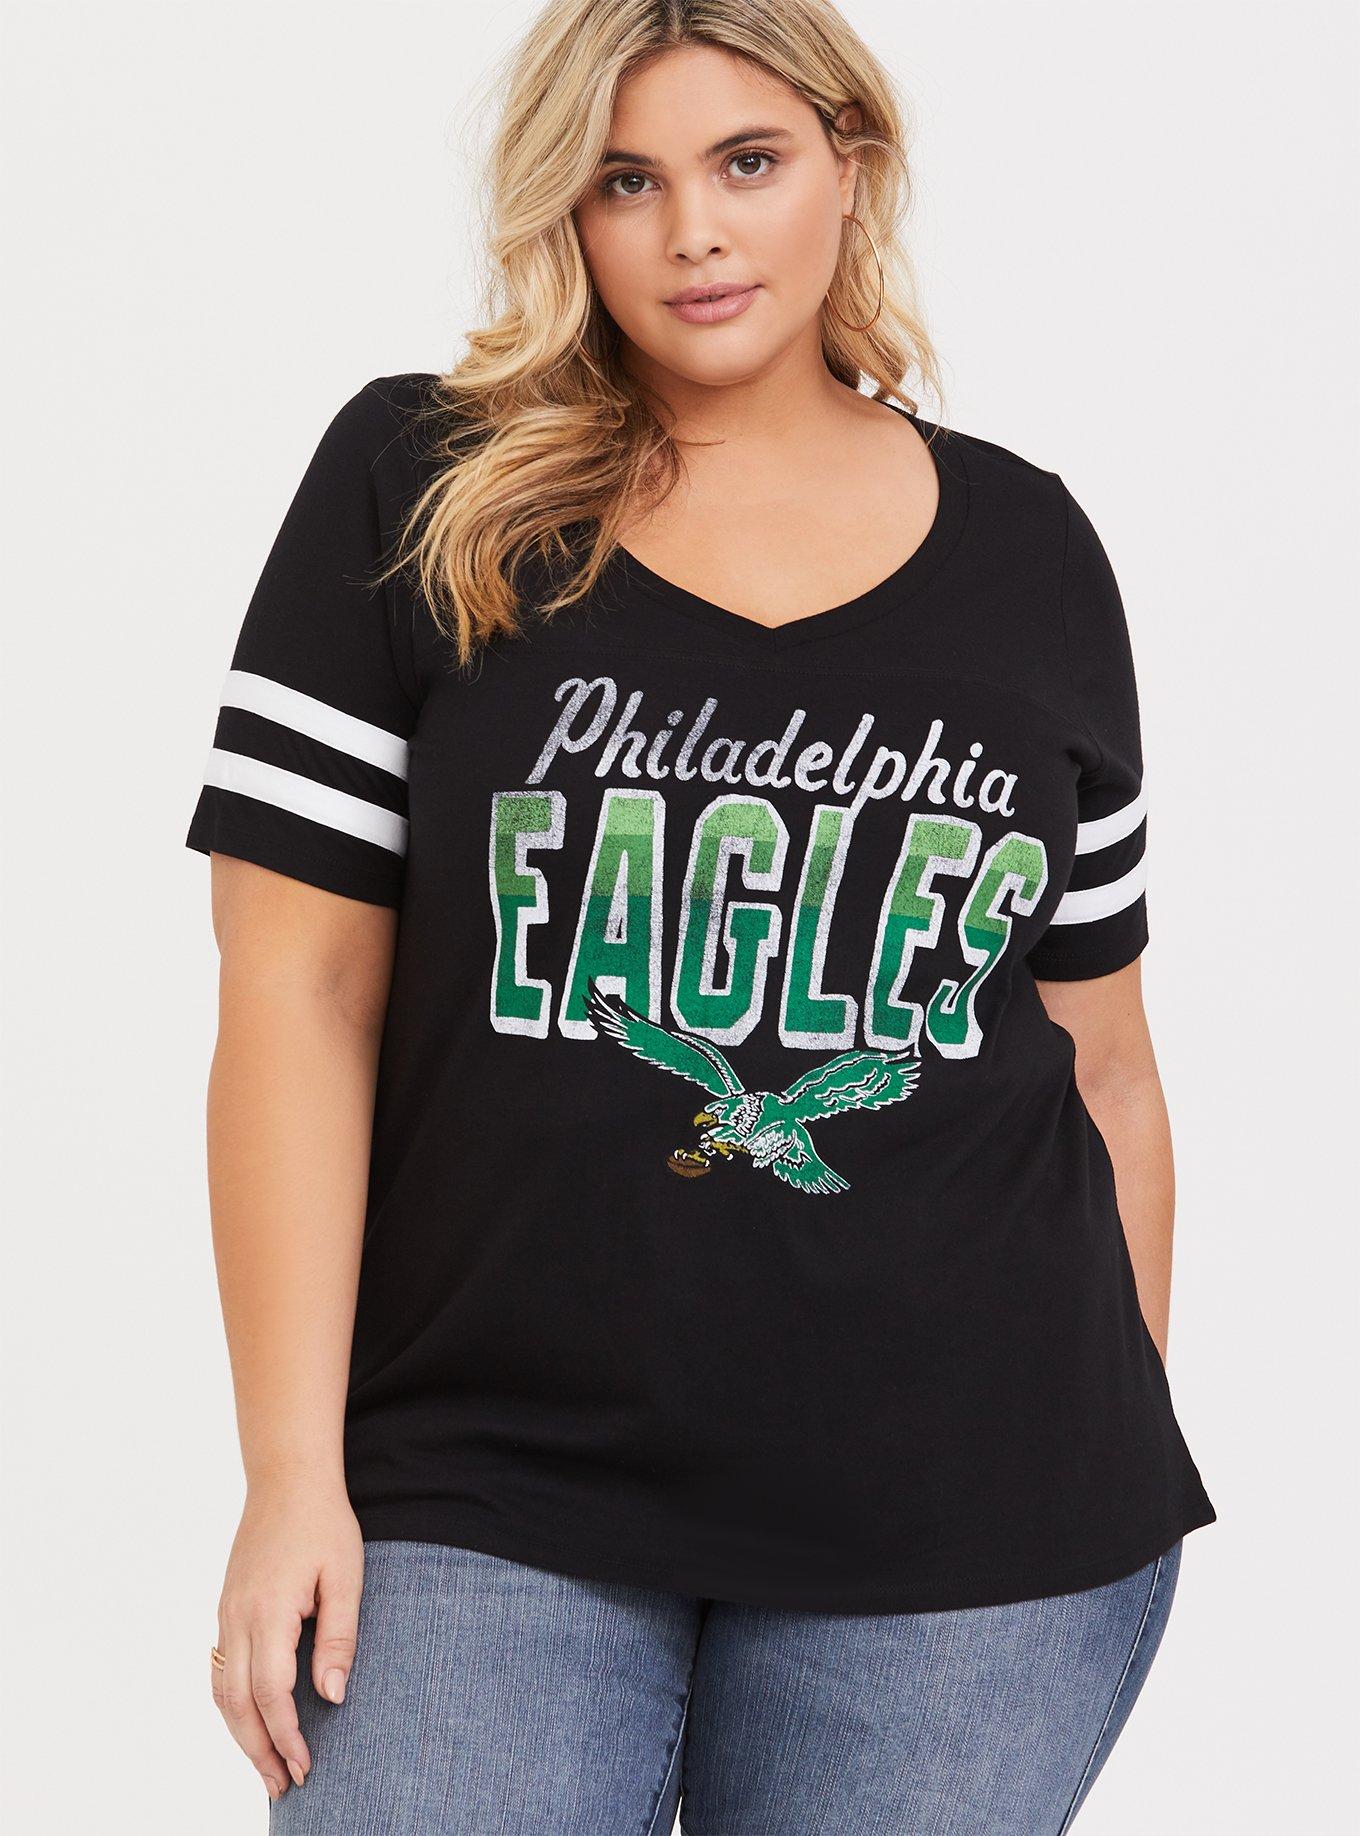 Women's Philadelphia Eagles Football Tee